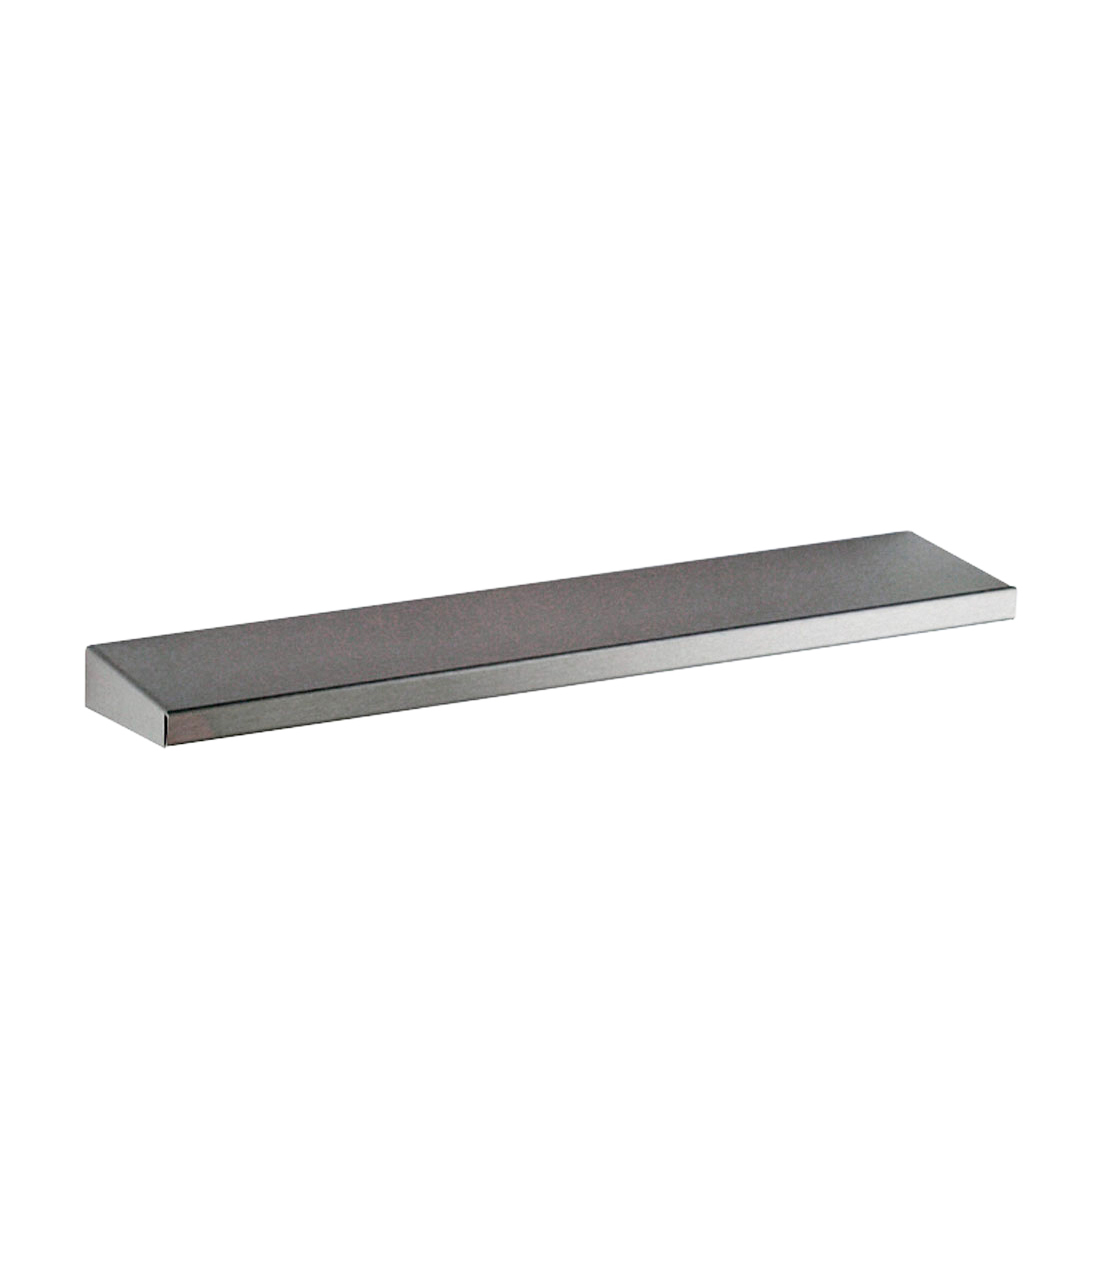 Stainless Steel Mirror Shelf - (Model #: ms-18)-image